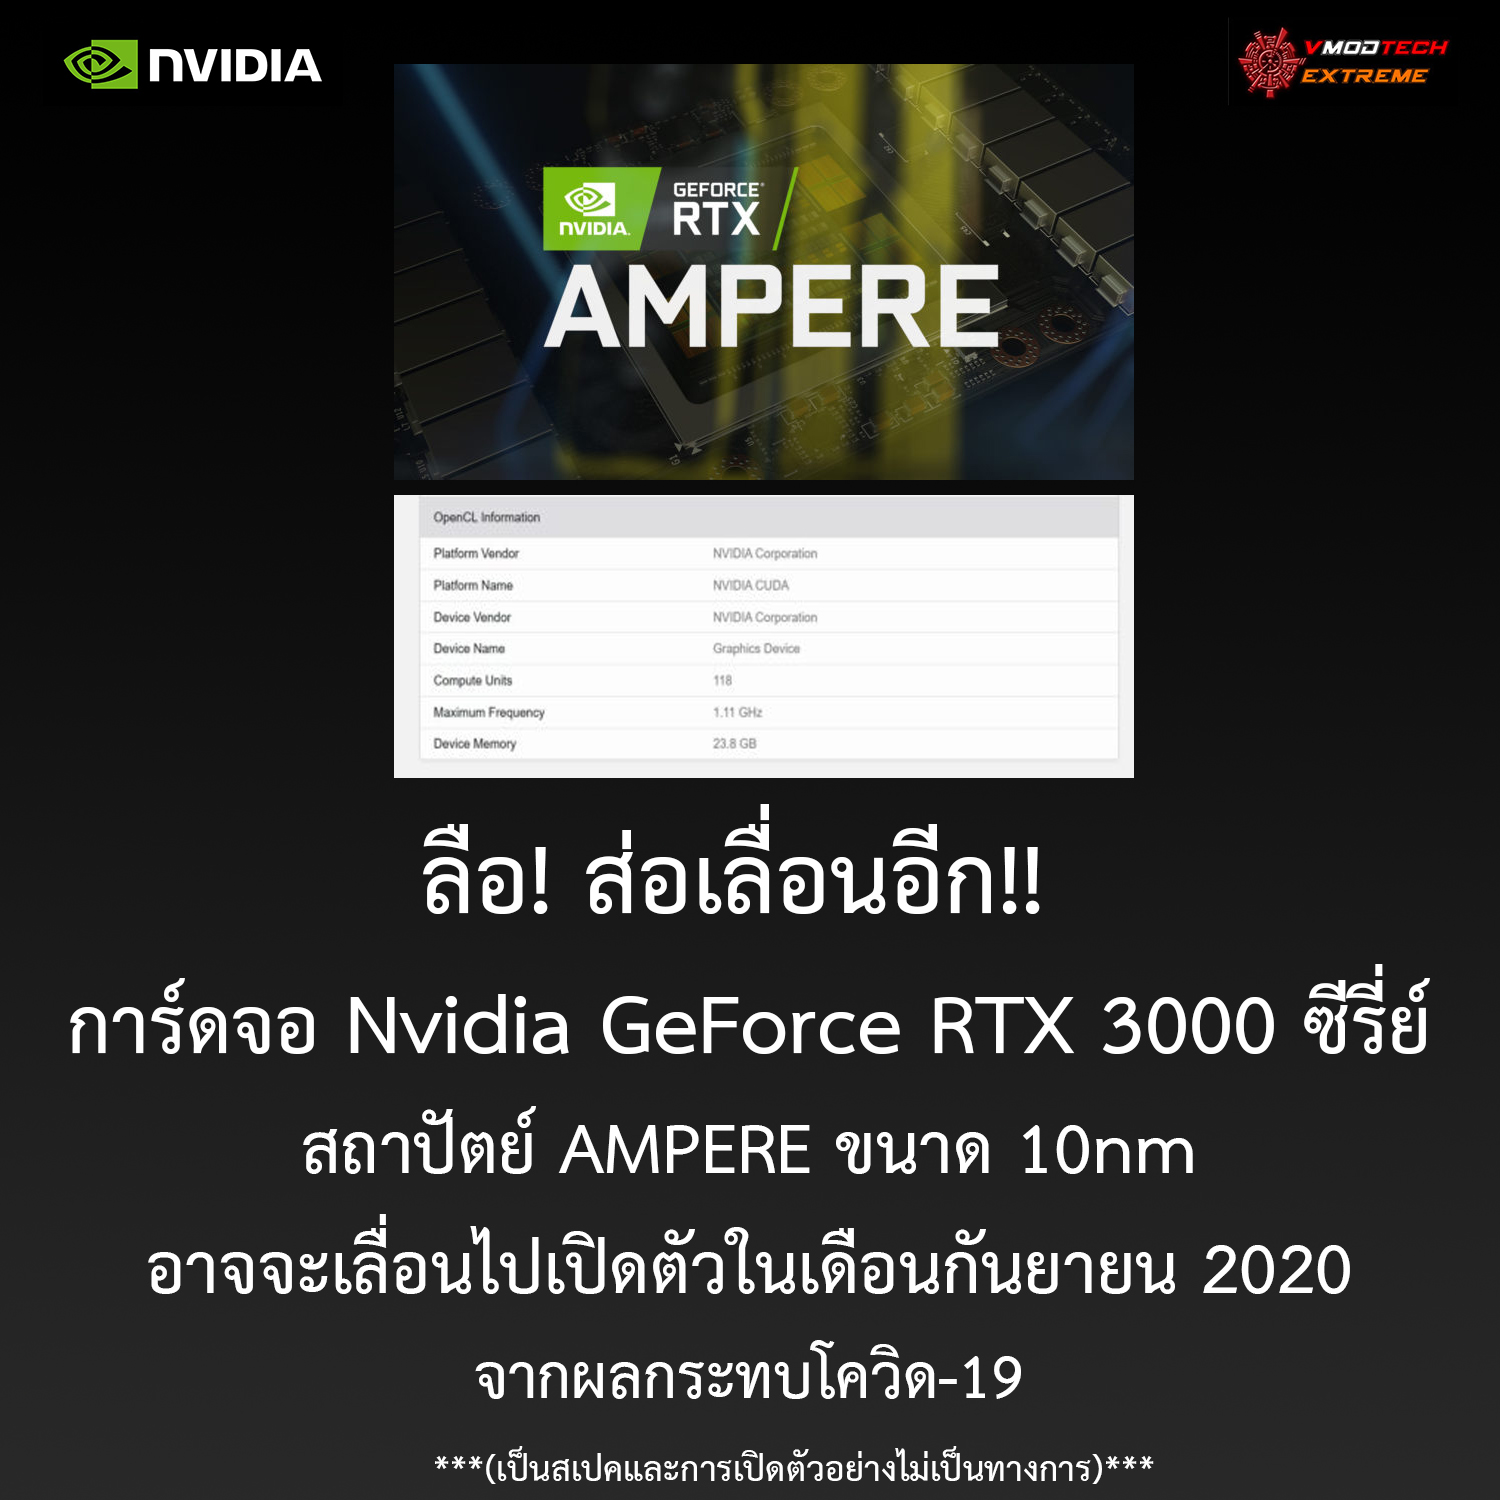 nvidia ampere sep 2020 ลือ! เลื่อนอีก!! การ์ดจอ Nvidia GeForce RTX 3000 ซีรี่ย์อาจจะเลื่อนไปเปิดตัวในเดือนกันยายน 2020